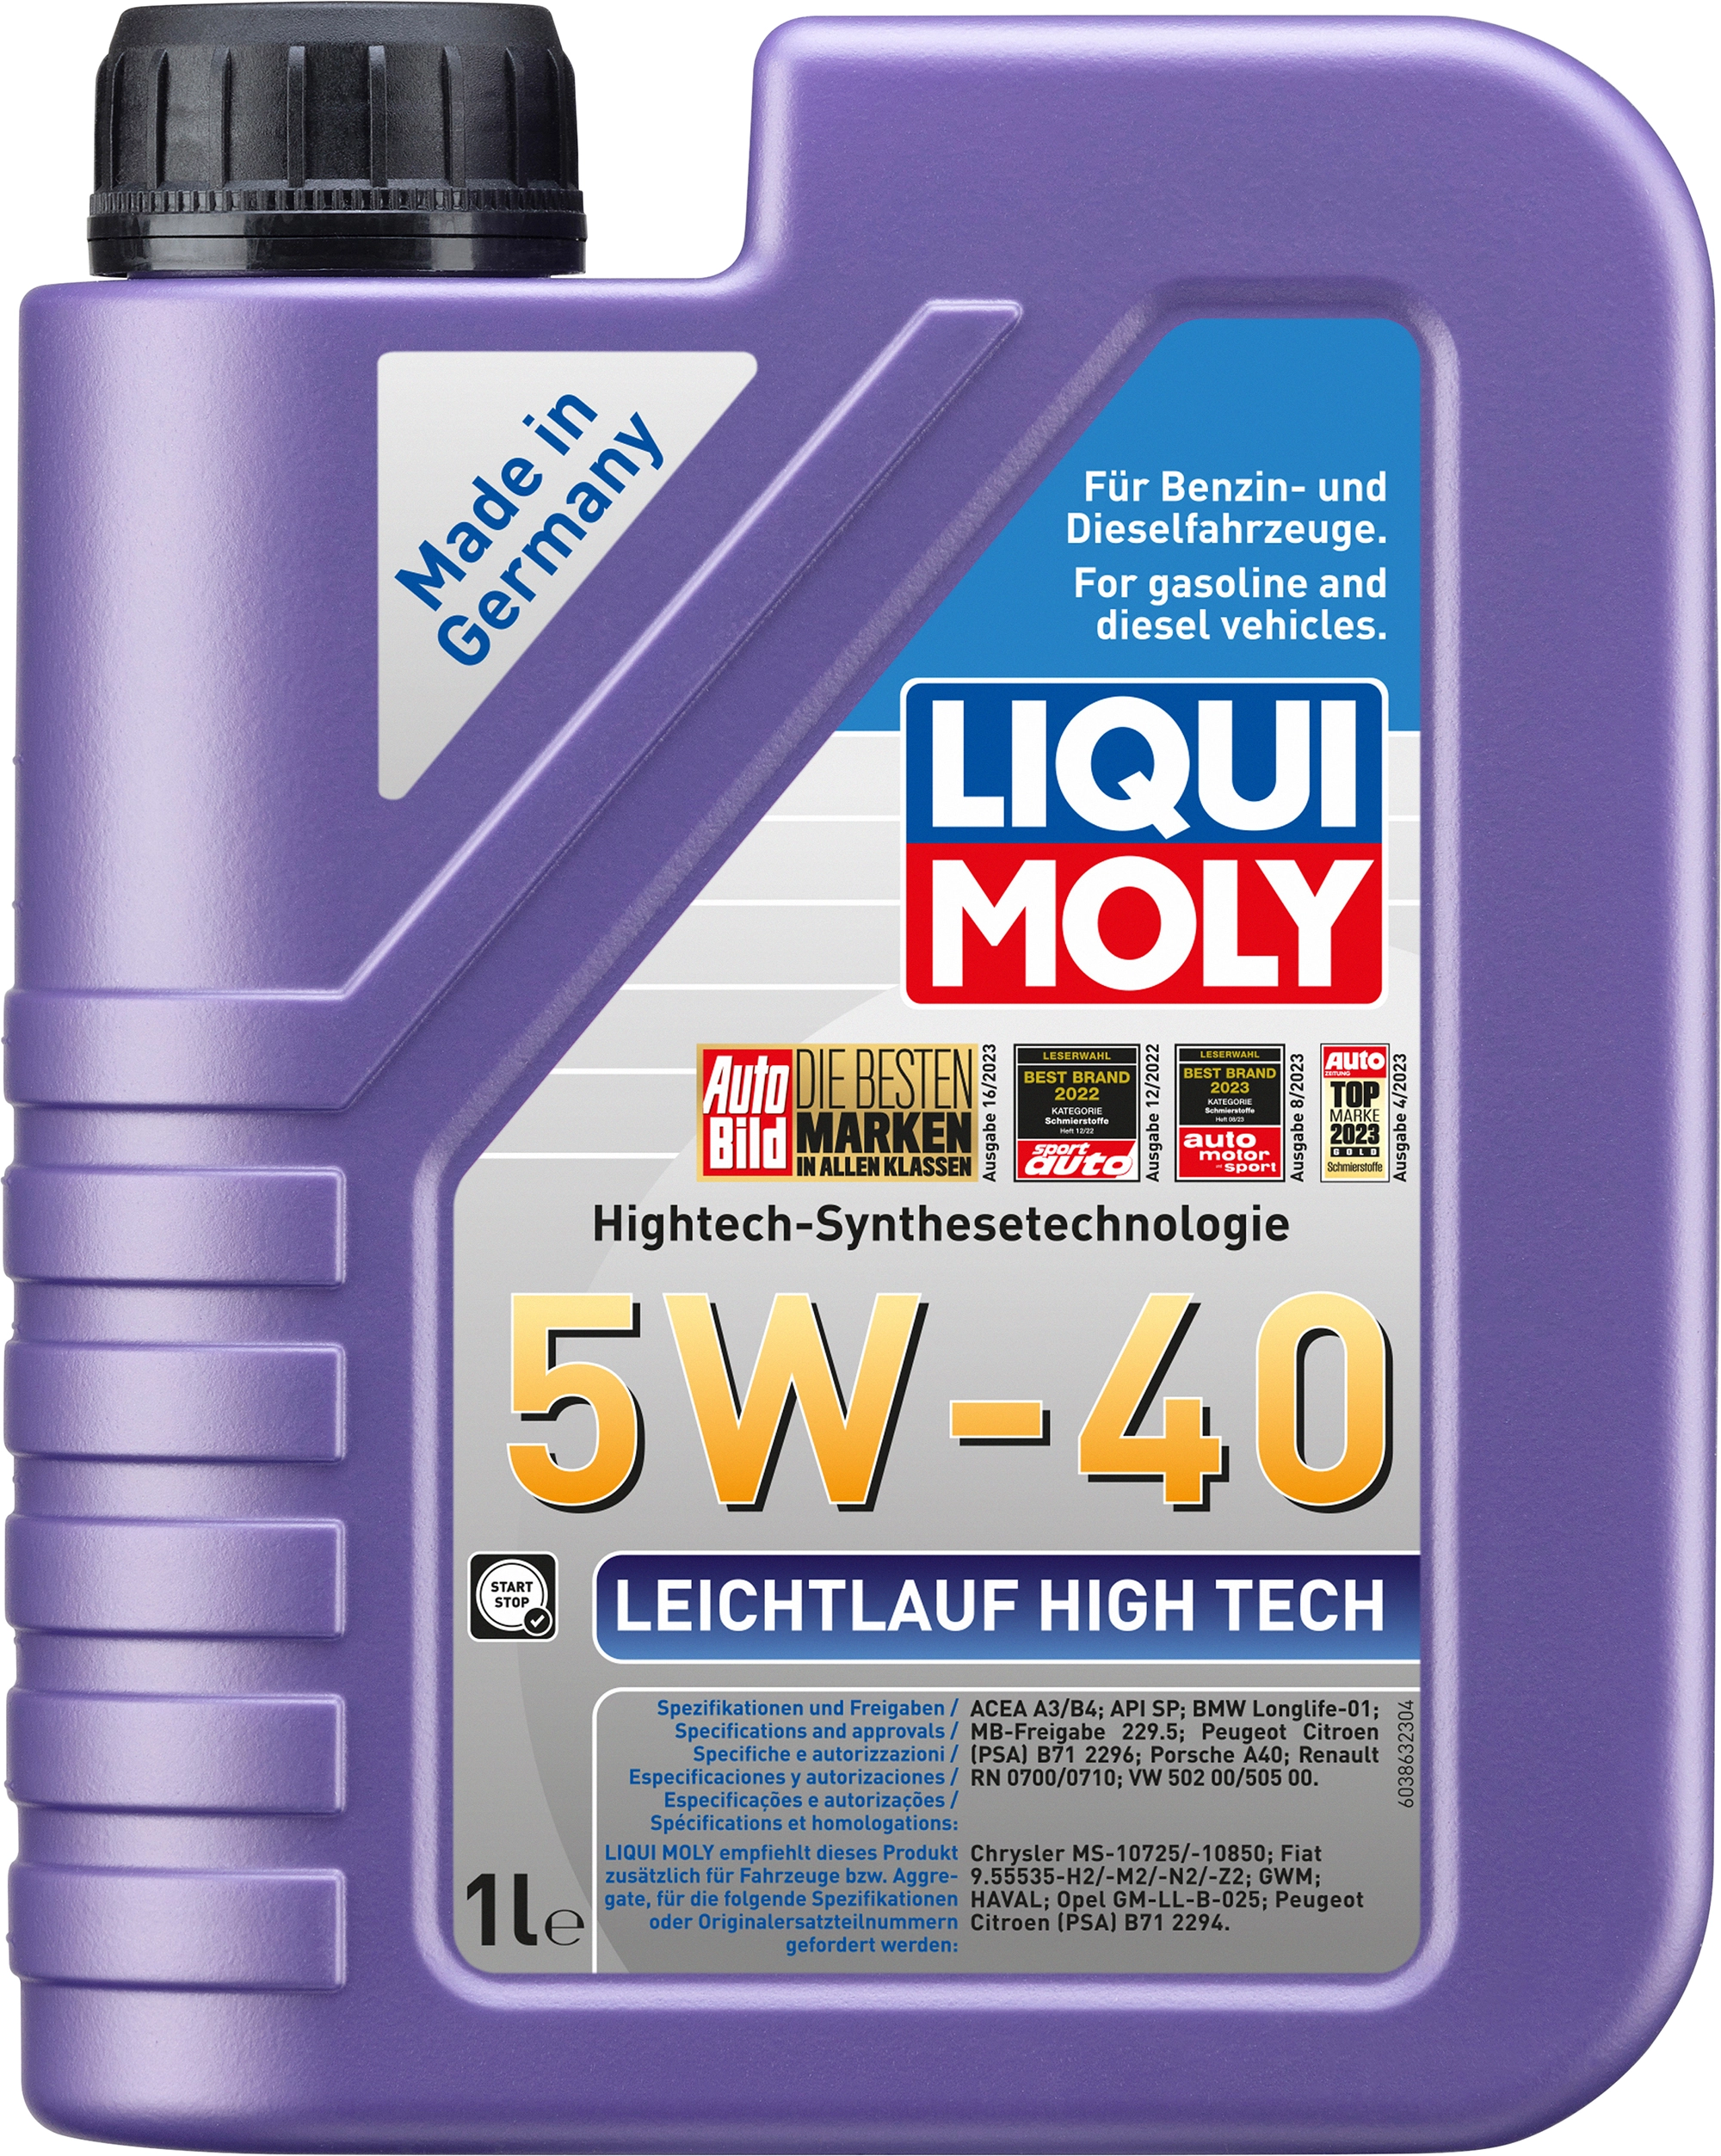 Liqui Moly Leichtlauf High Tech 5W-40 1 l kaufen bei OBI